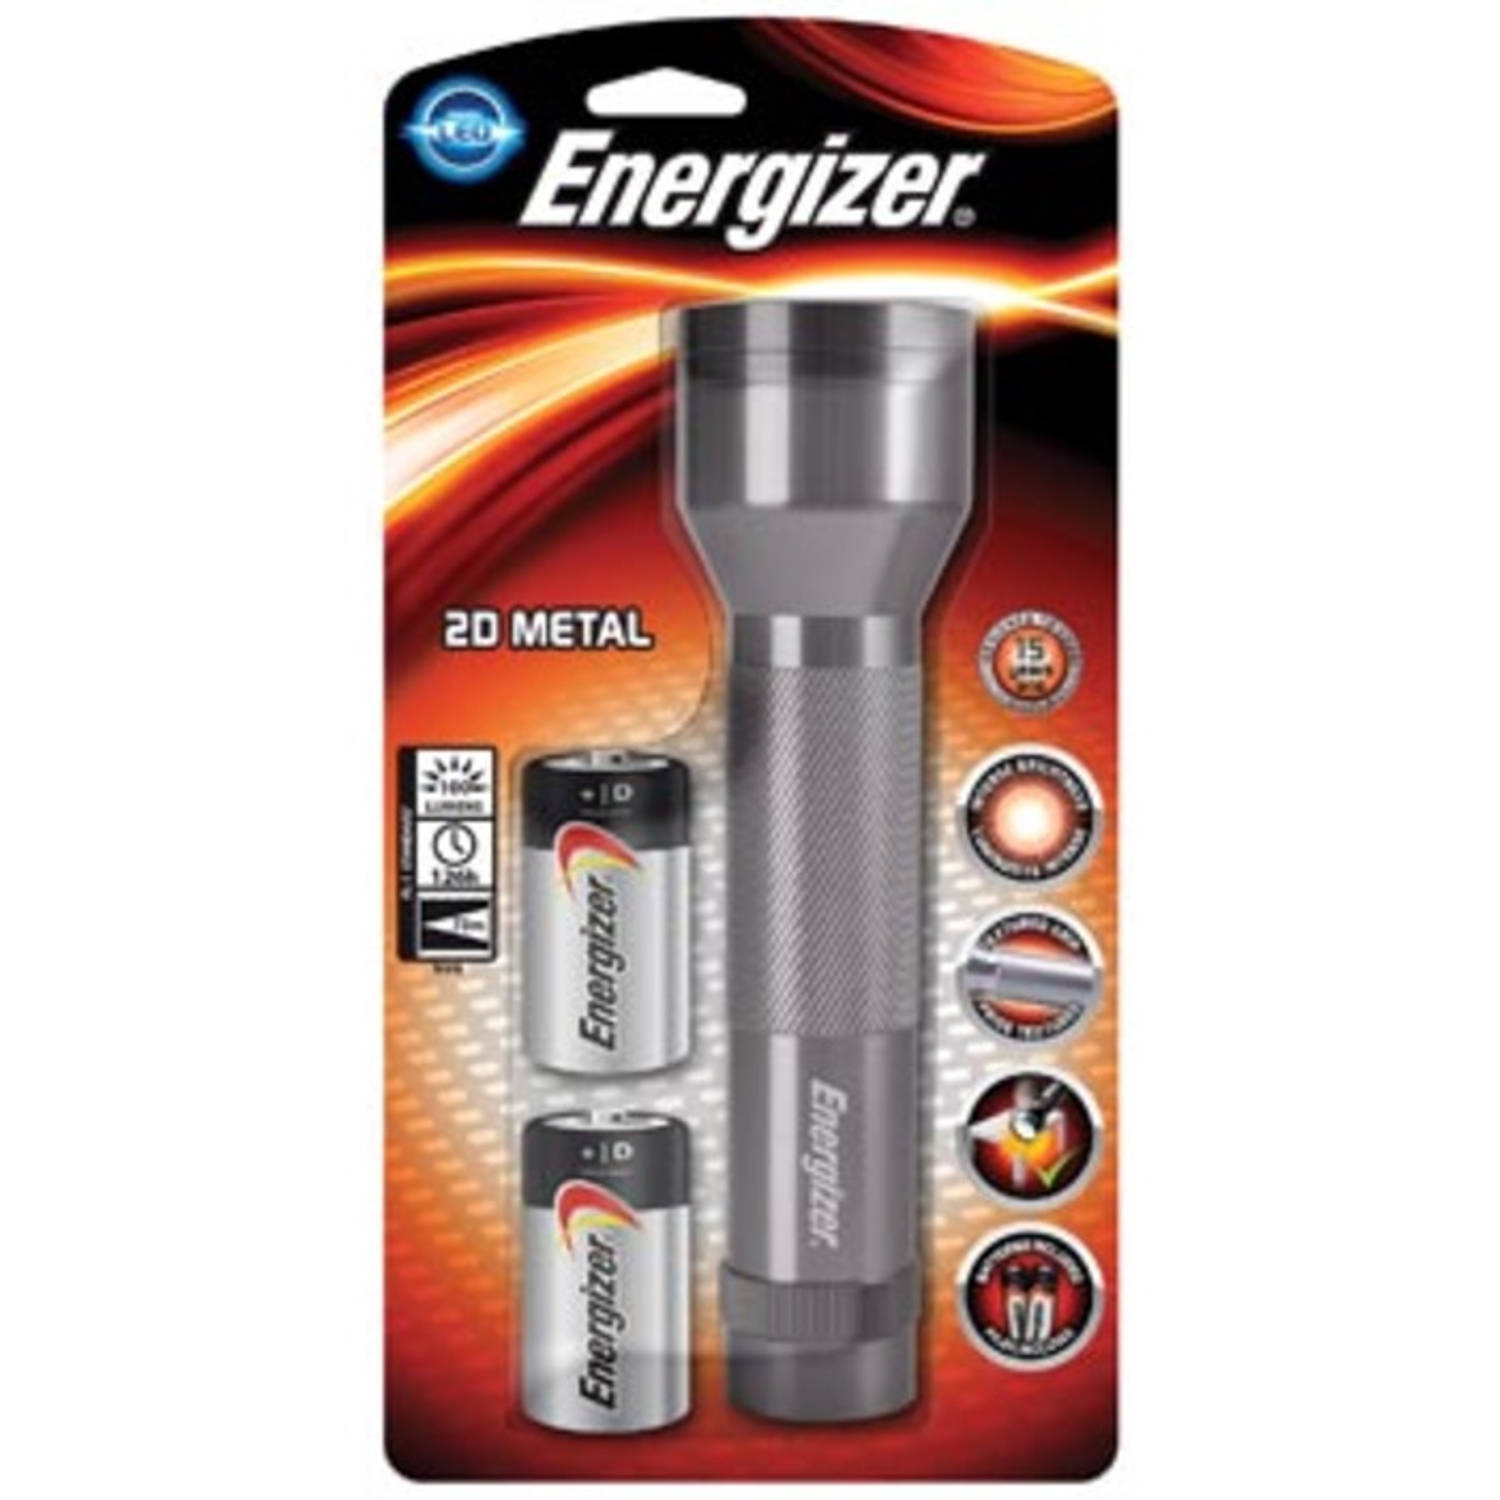 Energizer Zaklamp Metal Led 2d, Inclusief 2 D Batterijen, Op Blister